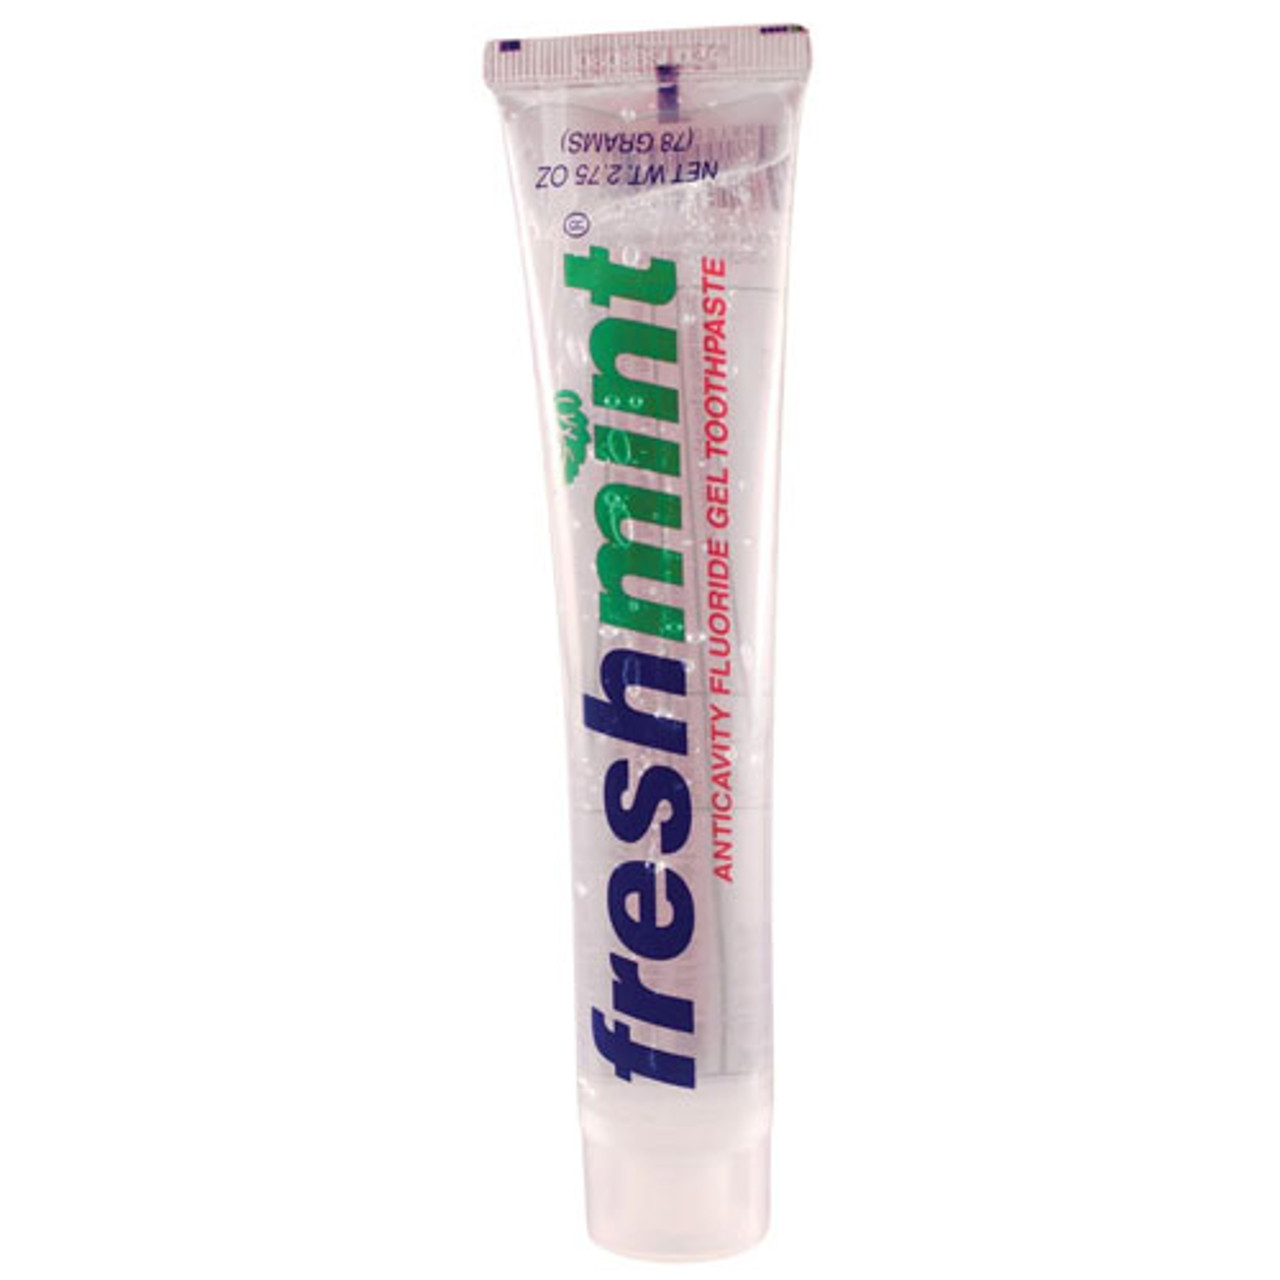 NWI Gel Toothpaste Anticavity Fluoride, 2.75 oz, 144/cs